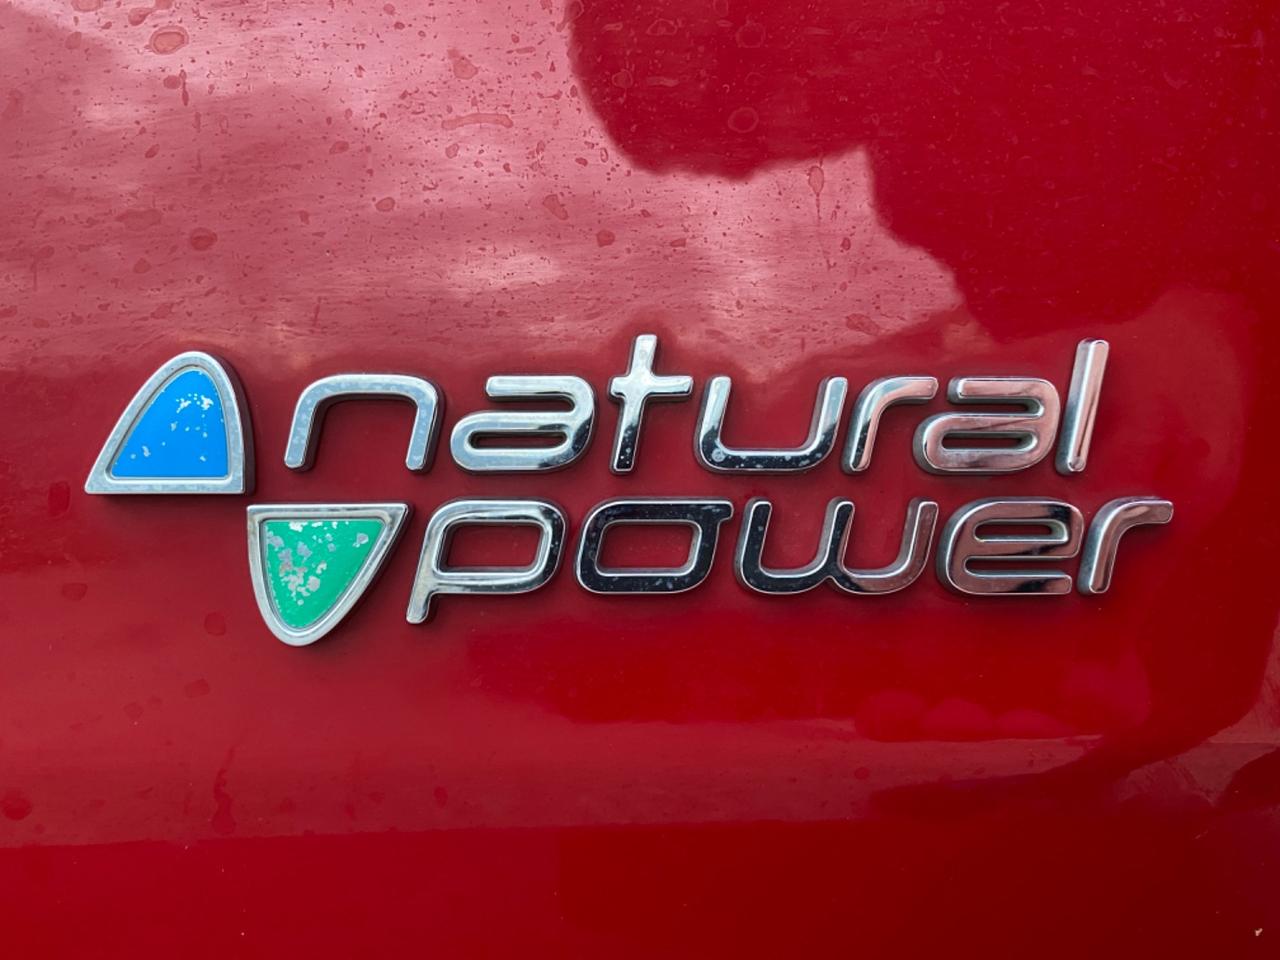 Fiat Panda 1.4 Natural Power Classic